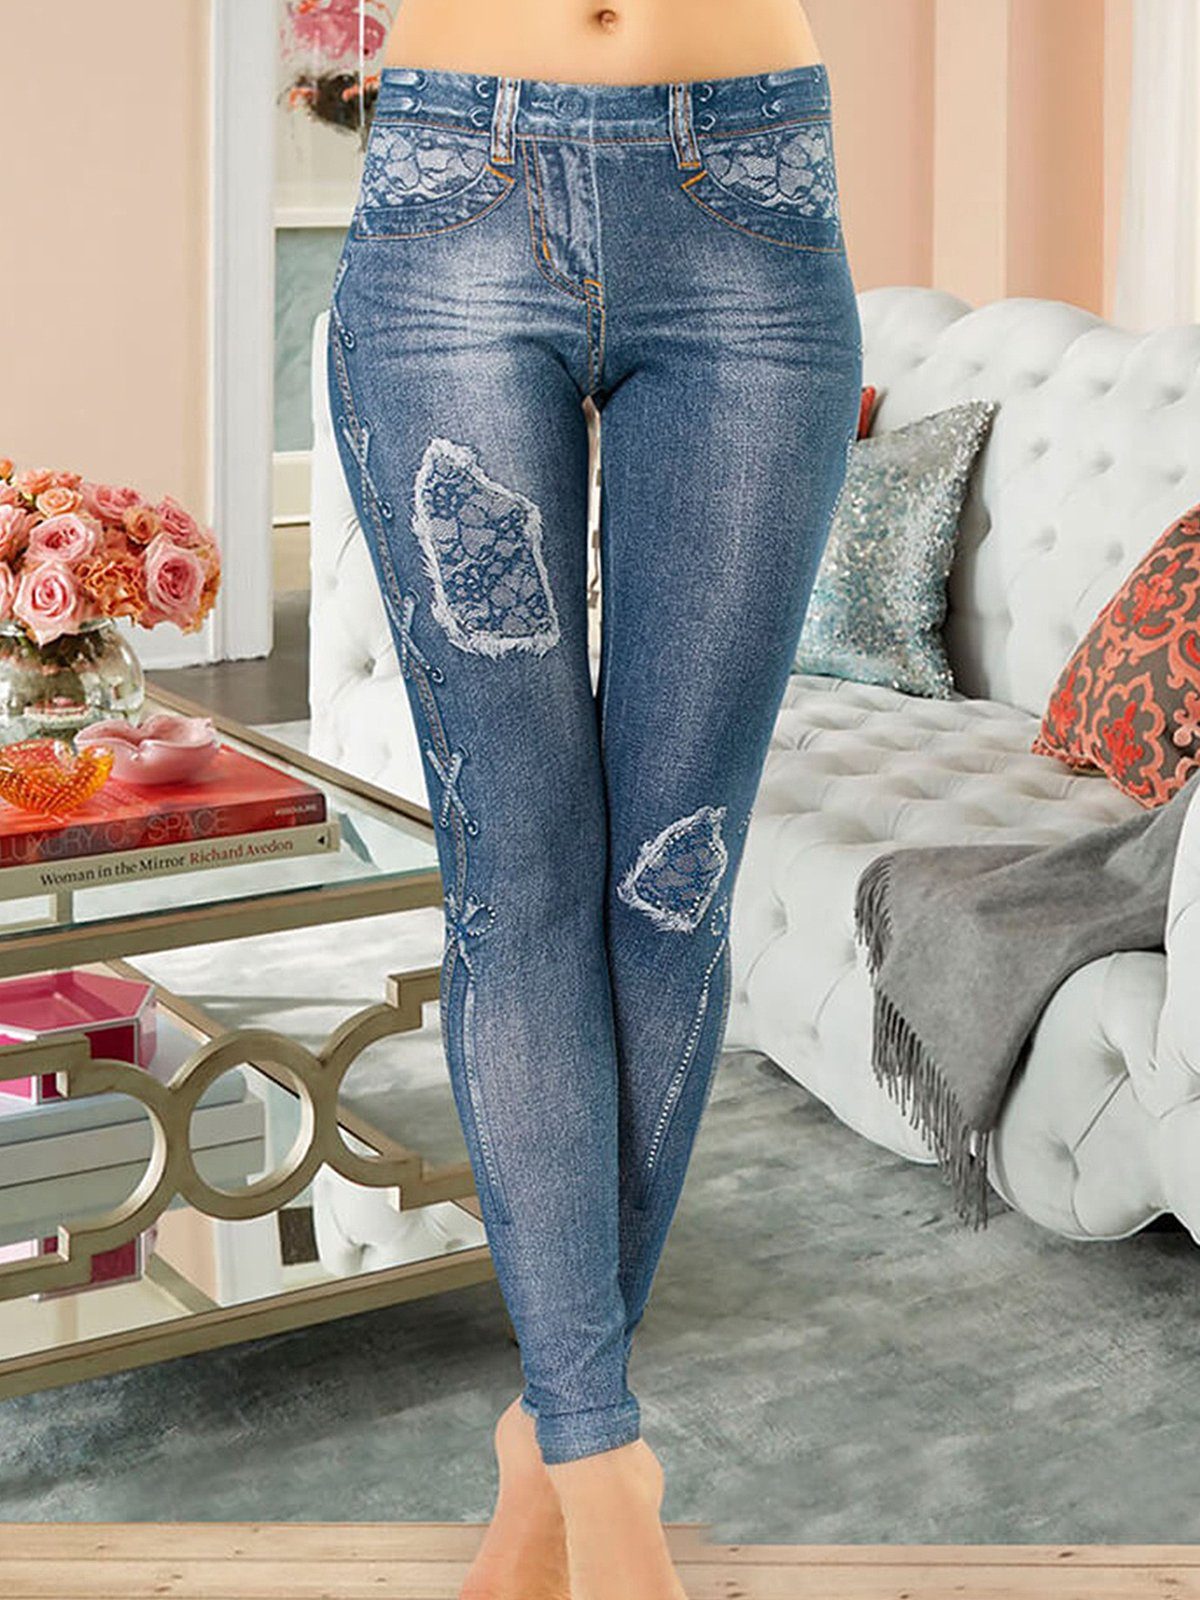 Derya Kursun Leggings »Damen Stretch Tight« (34-36 / XS-S)  Jeanshosen-Printed, DK438-2 online kaufen | OTTO